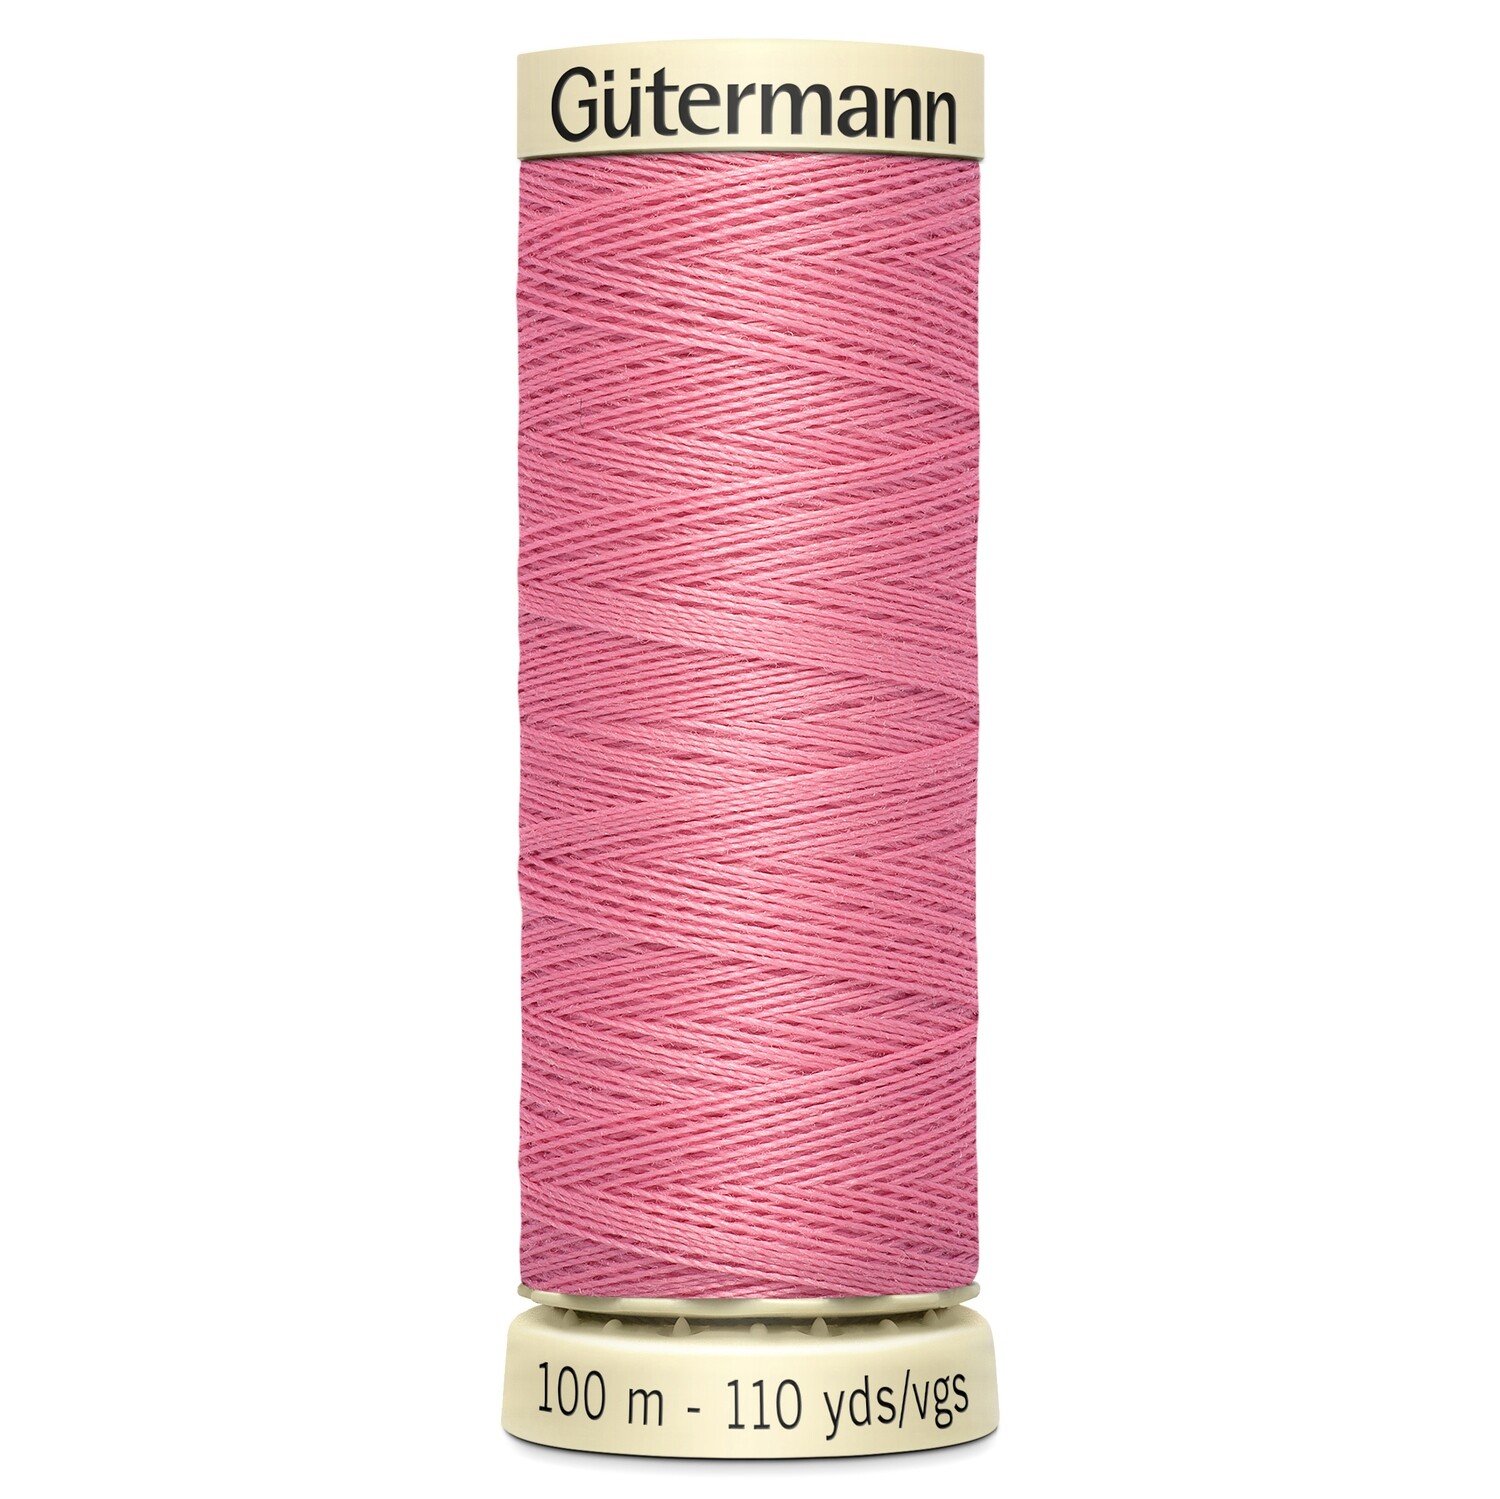 Gutermann Sew-All thread 889